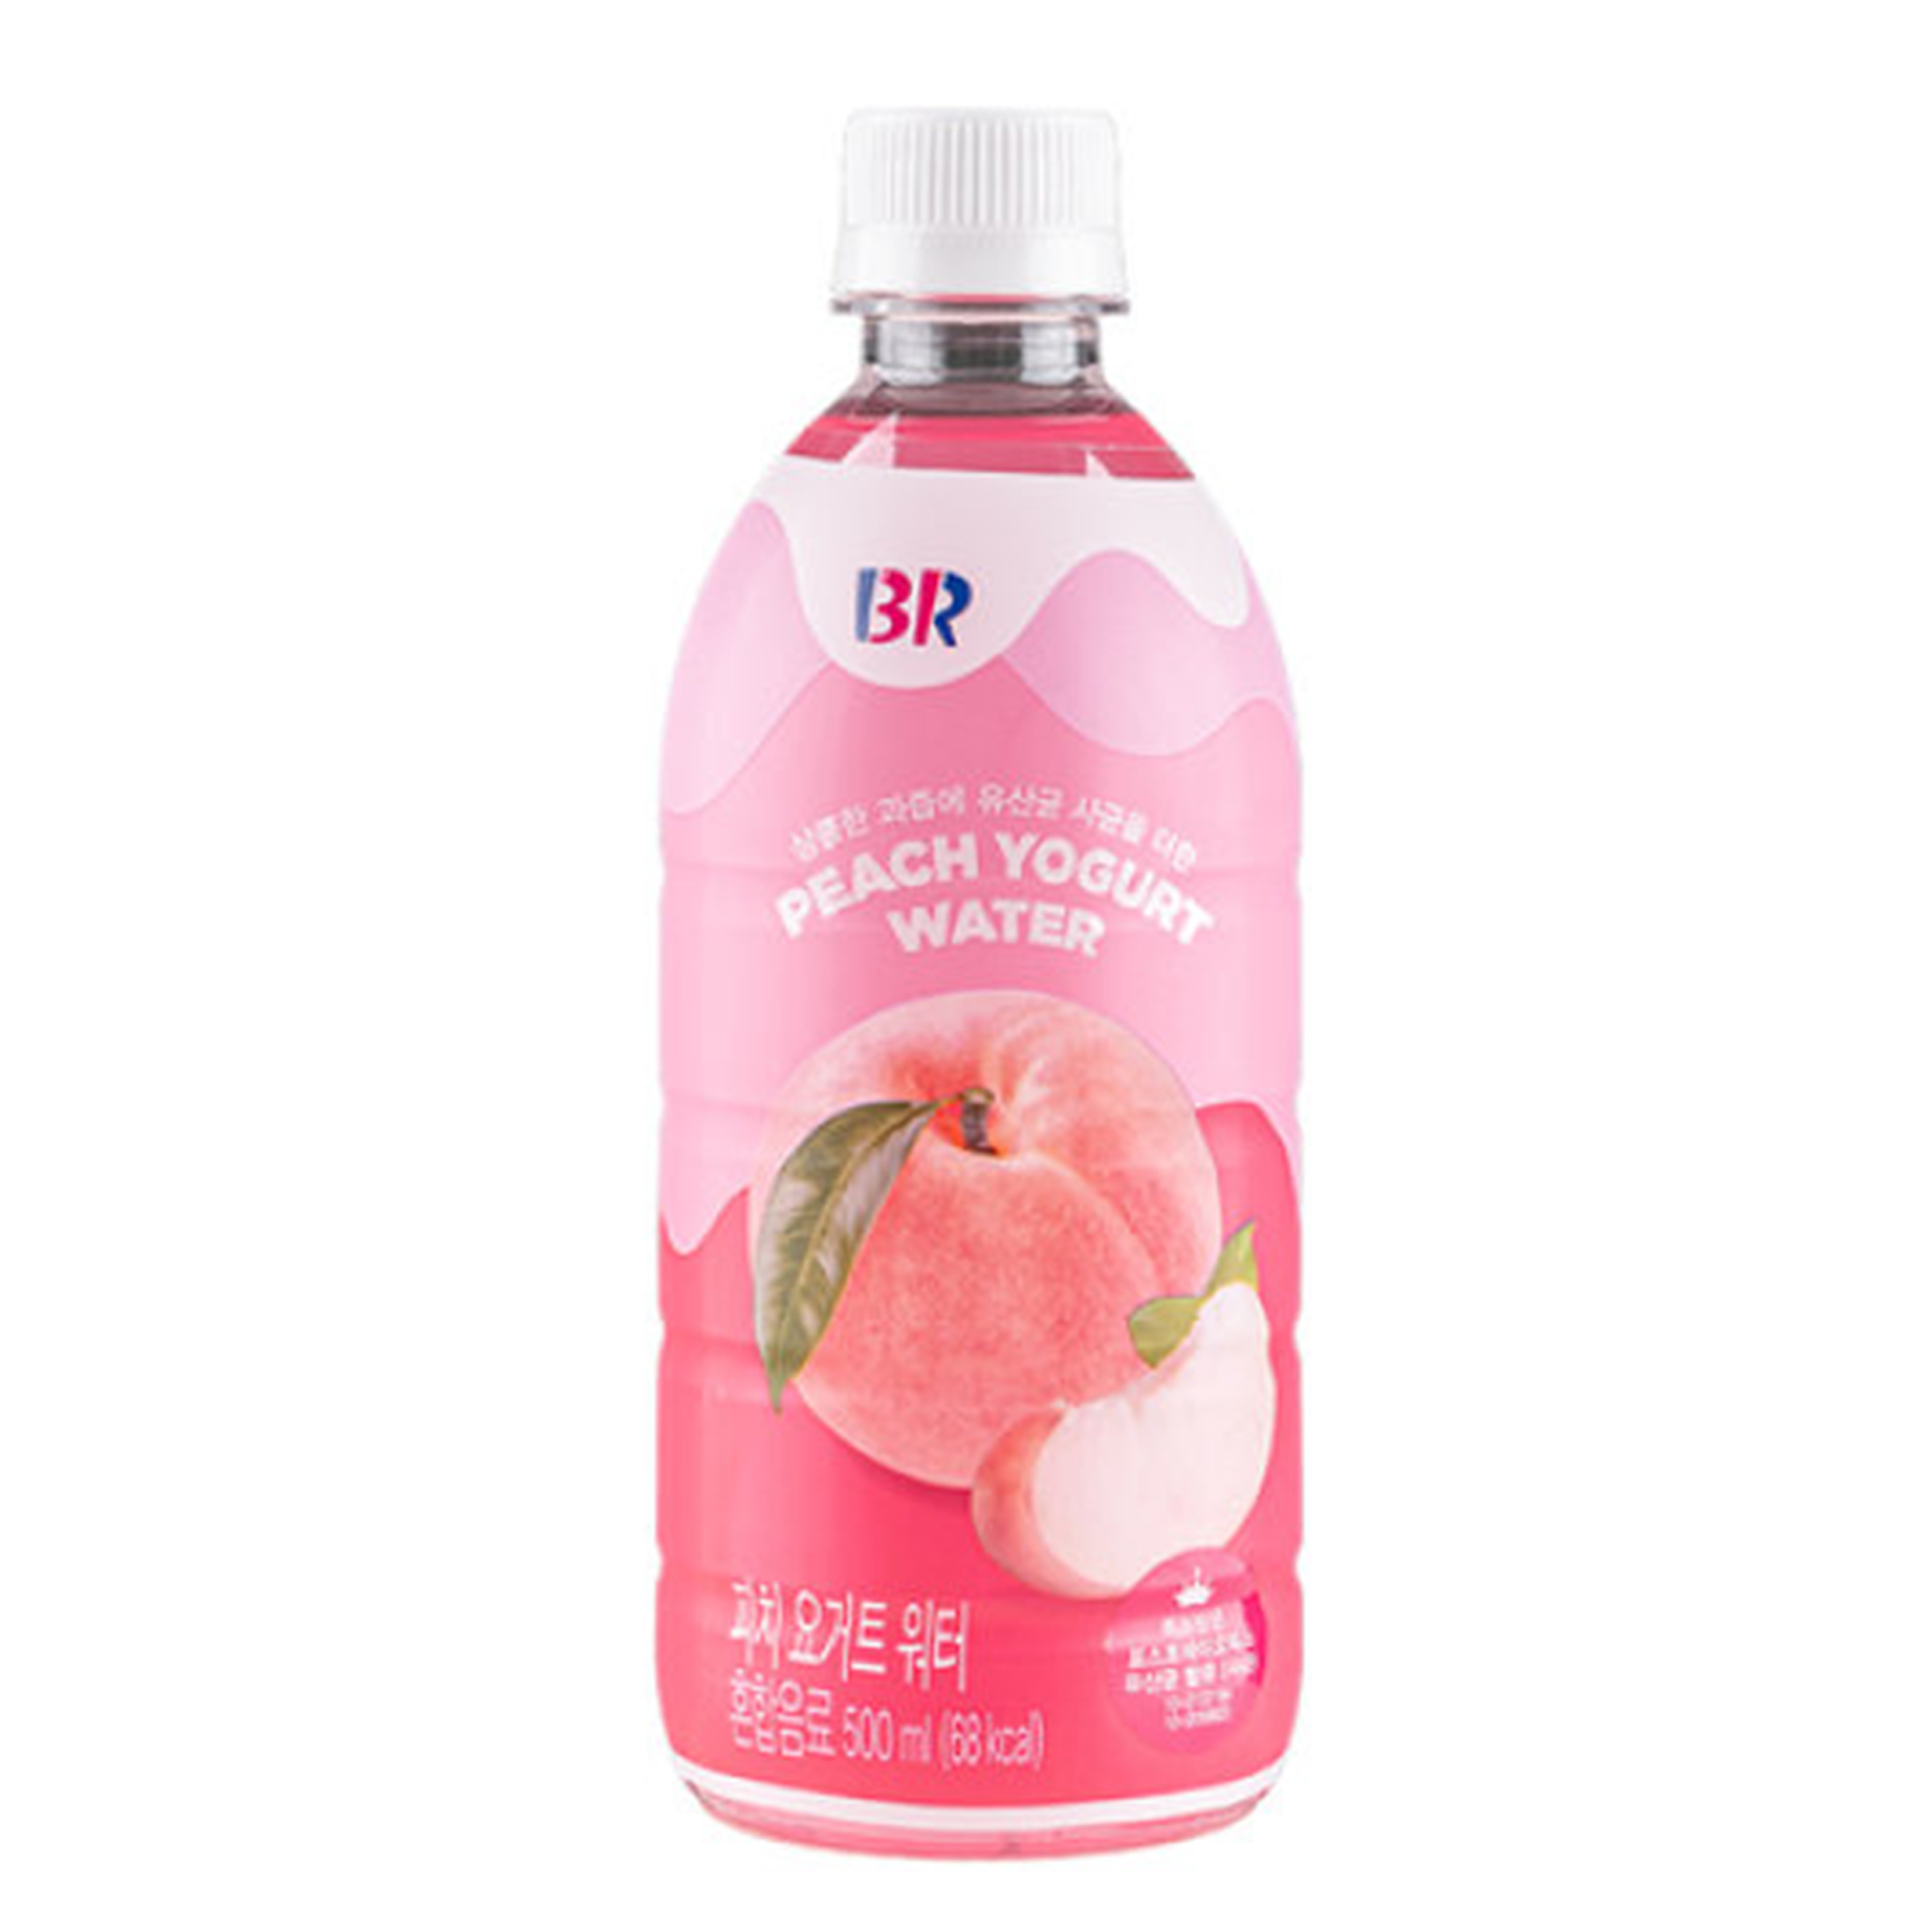 Baskin Robbins - Peach Yogurt Water (Asia)